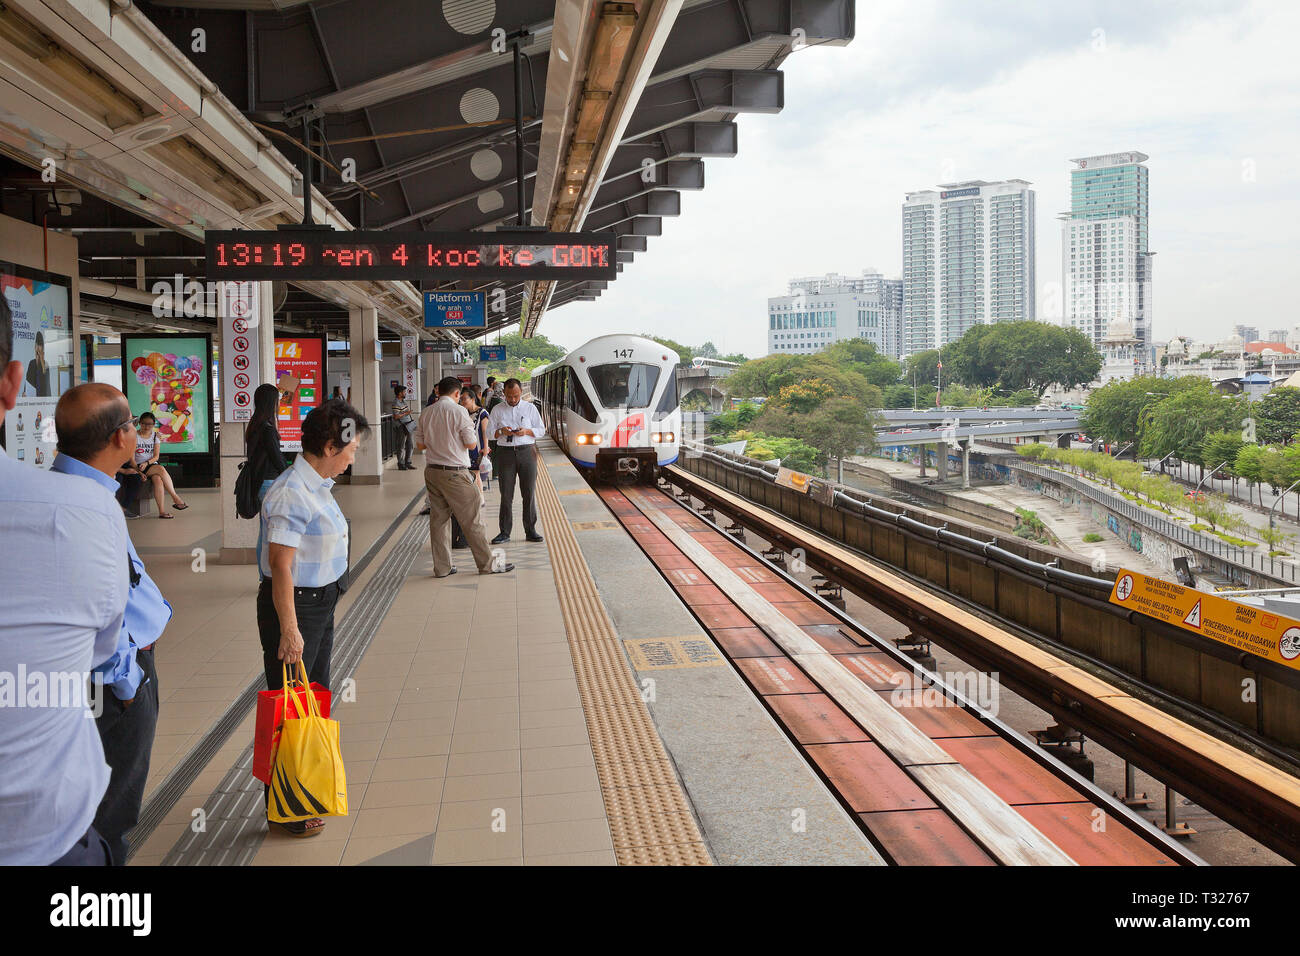 Kuala Lumpur, Malasia, Rapid KL light railway, el tren llega a la estación de cercanías de carro plataforma, viajeros esperando a bordo. Foto de stock